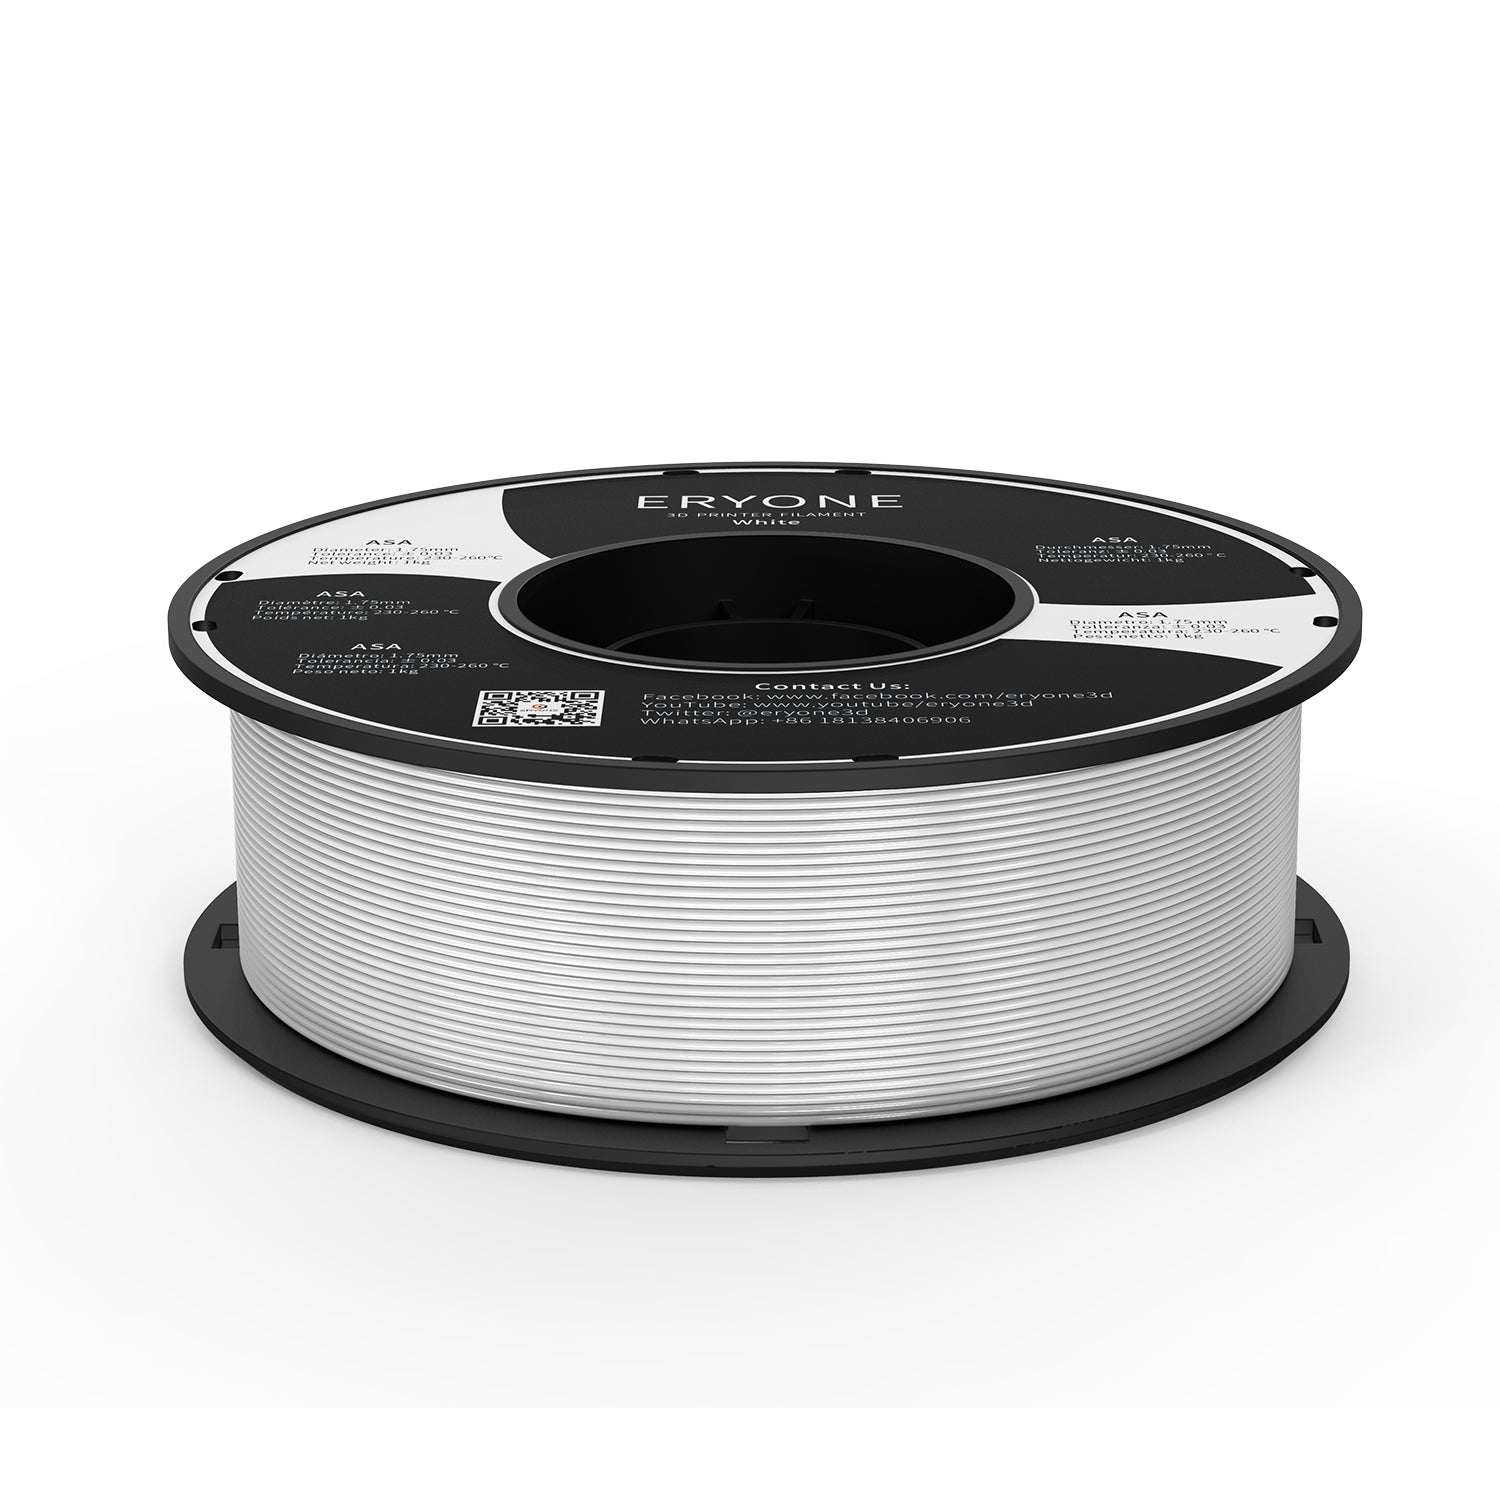 ERYONE ASA 3D Printer Filament 1.75mm, Dimensional Accuracy +/- 0.05 Mm 1kg (2.2LBS)/Spool